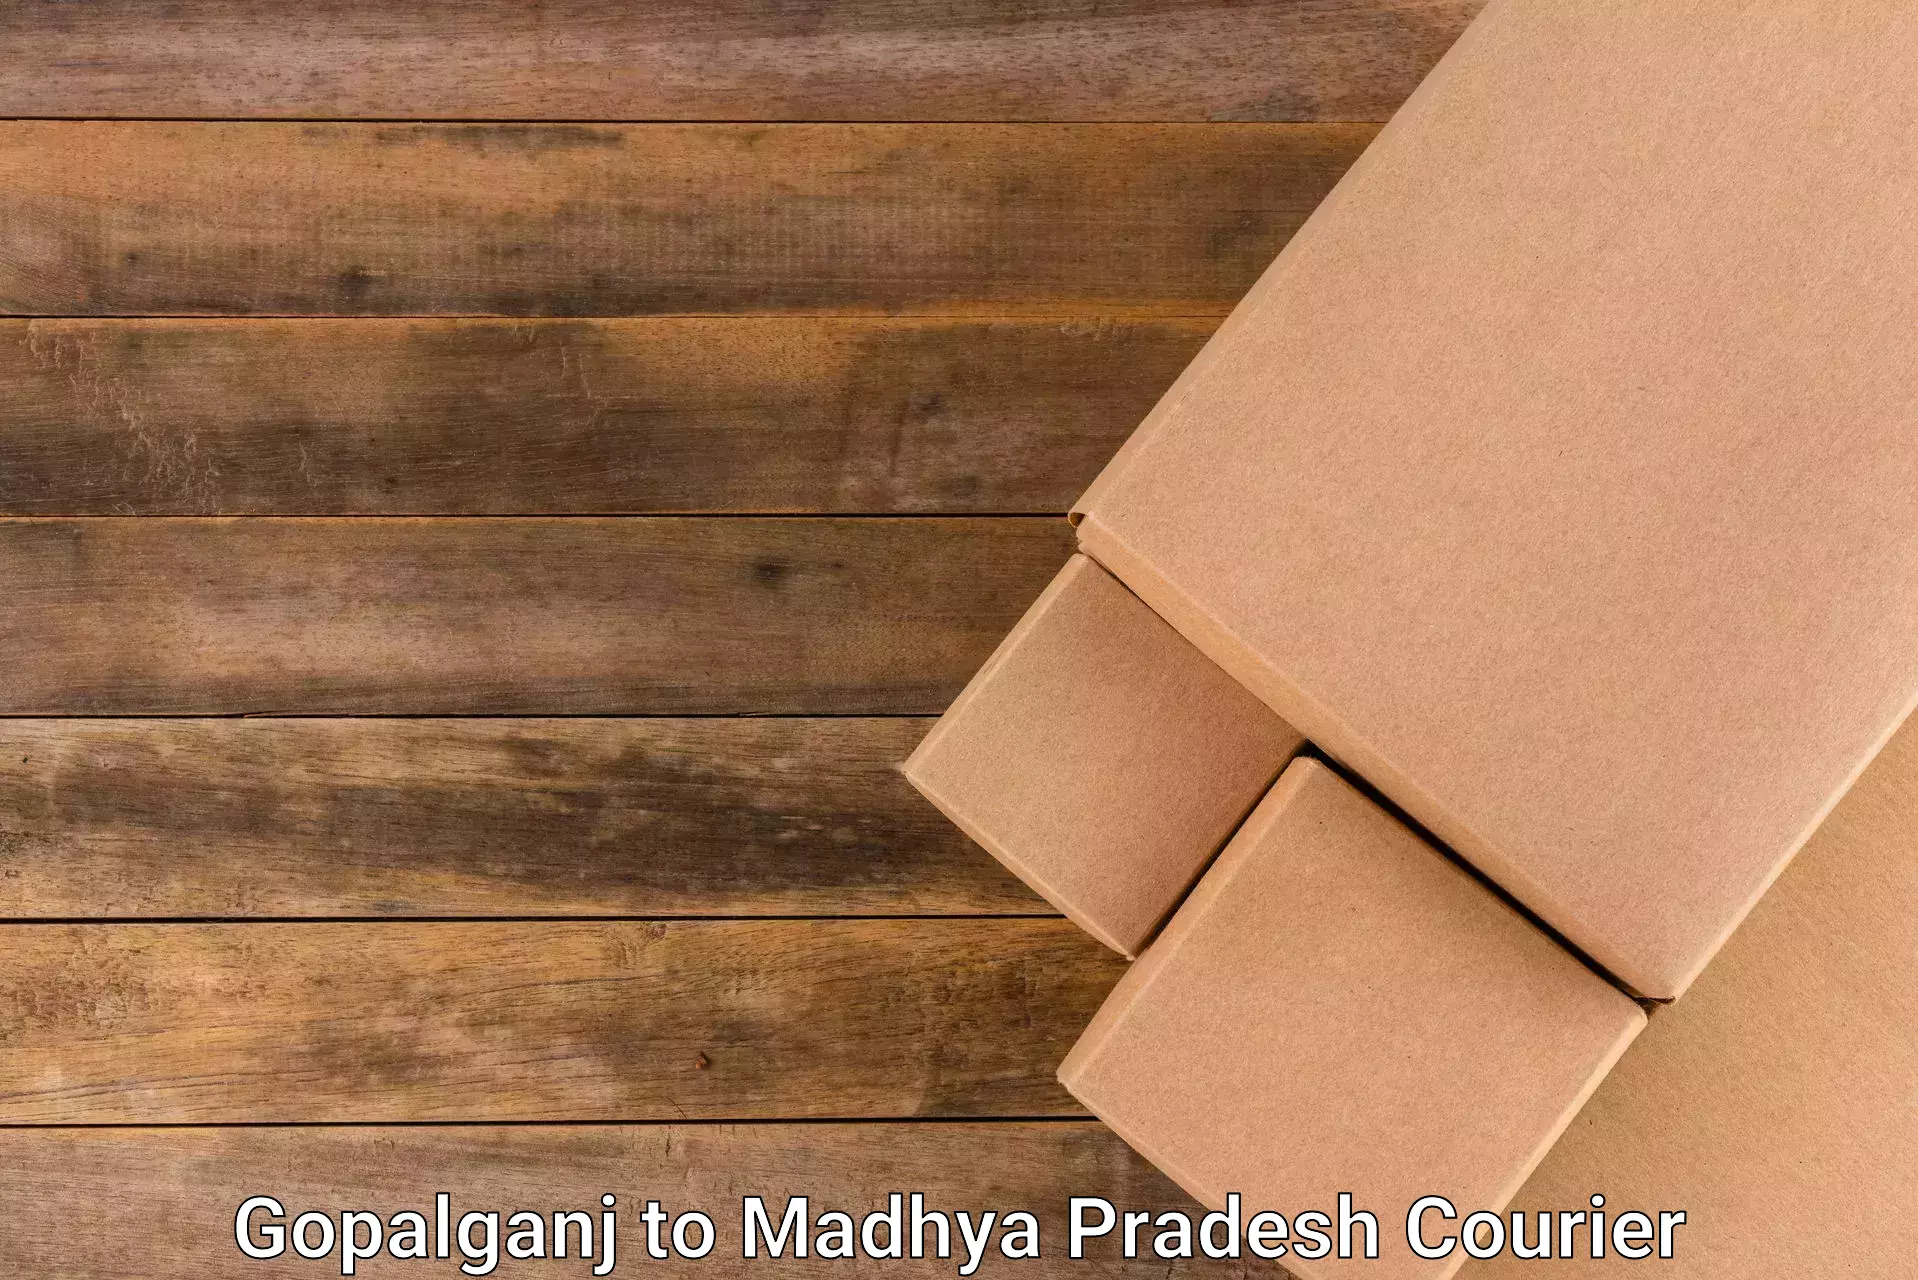 Package delivery network Gopalganj to BHEL Bhopal